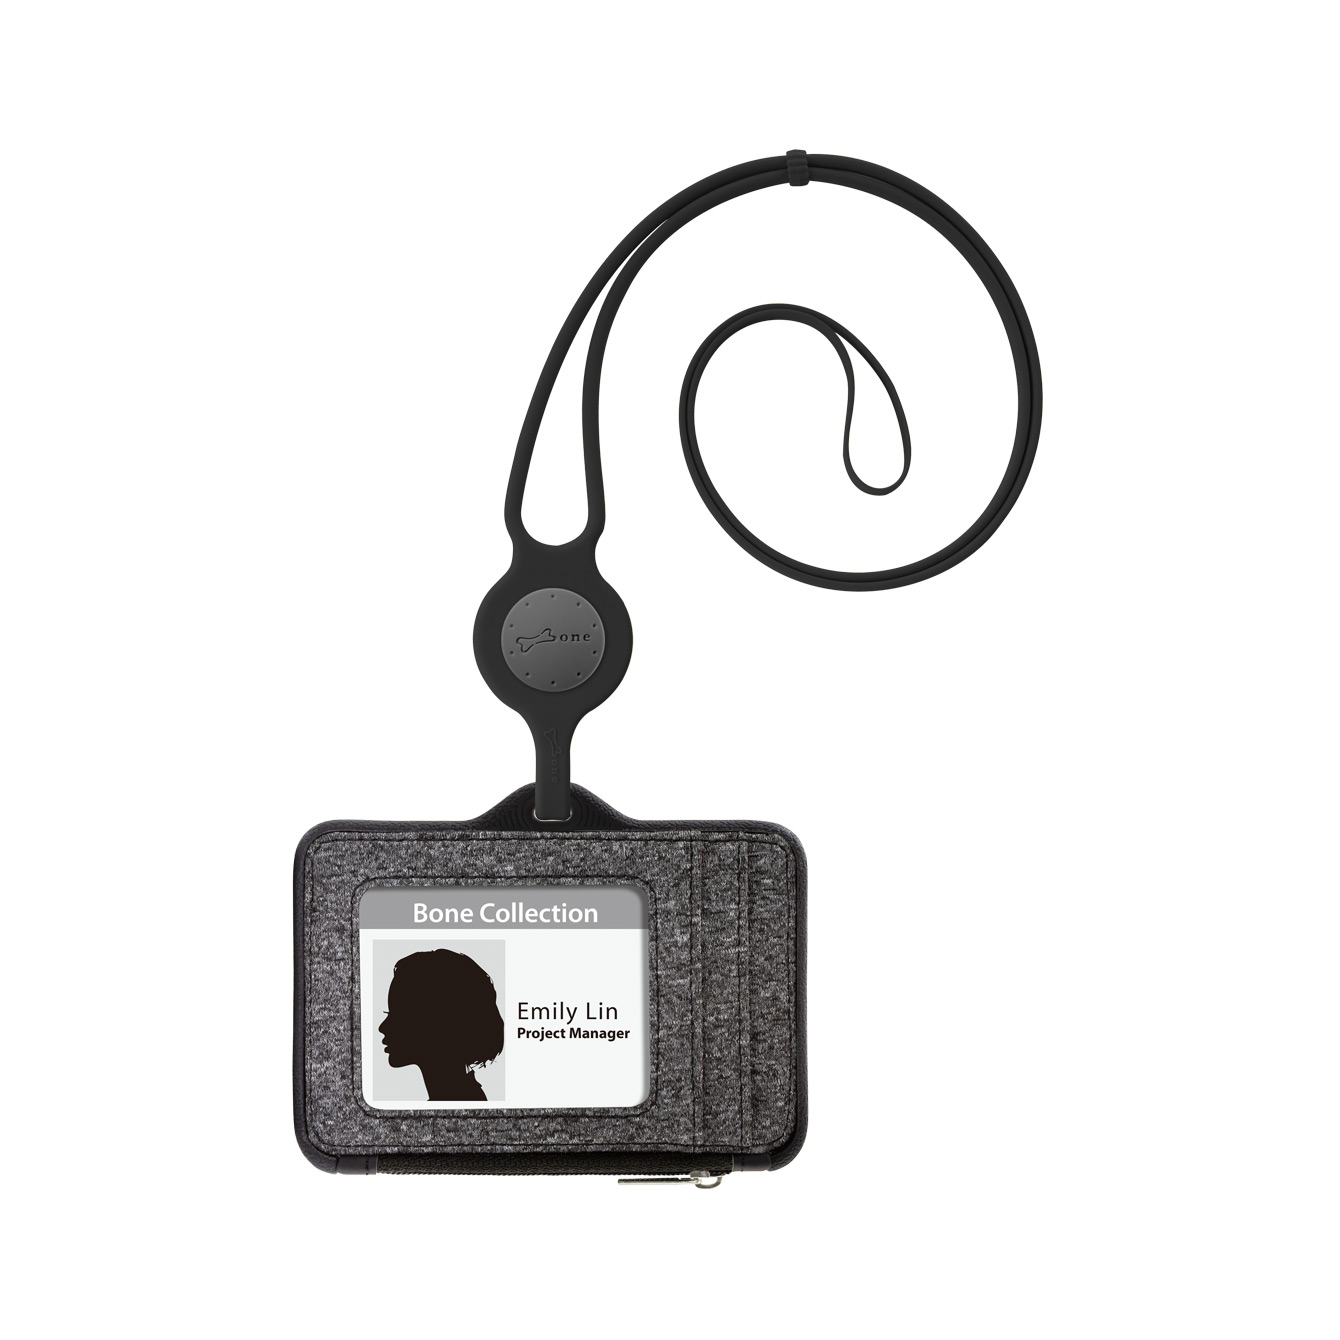 Lanyard Badge Holder - Card Holder - Home & Living - Mobile Life - Products  - Bone